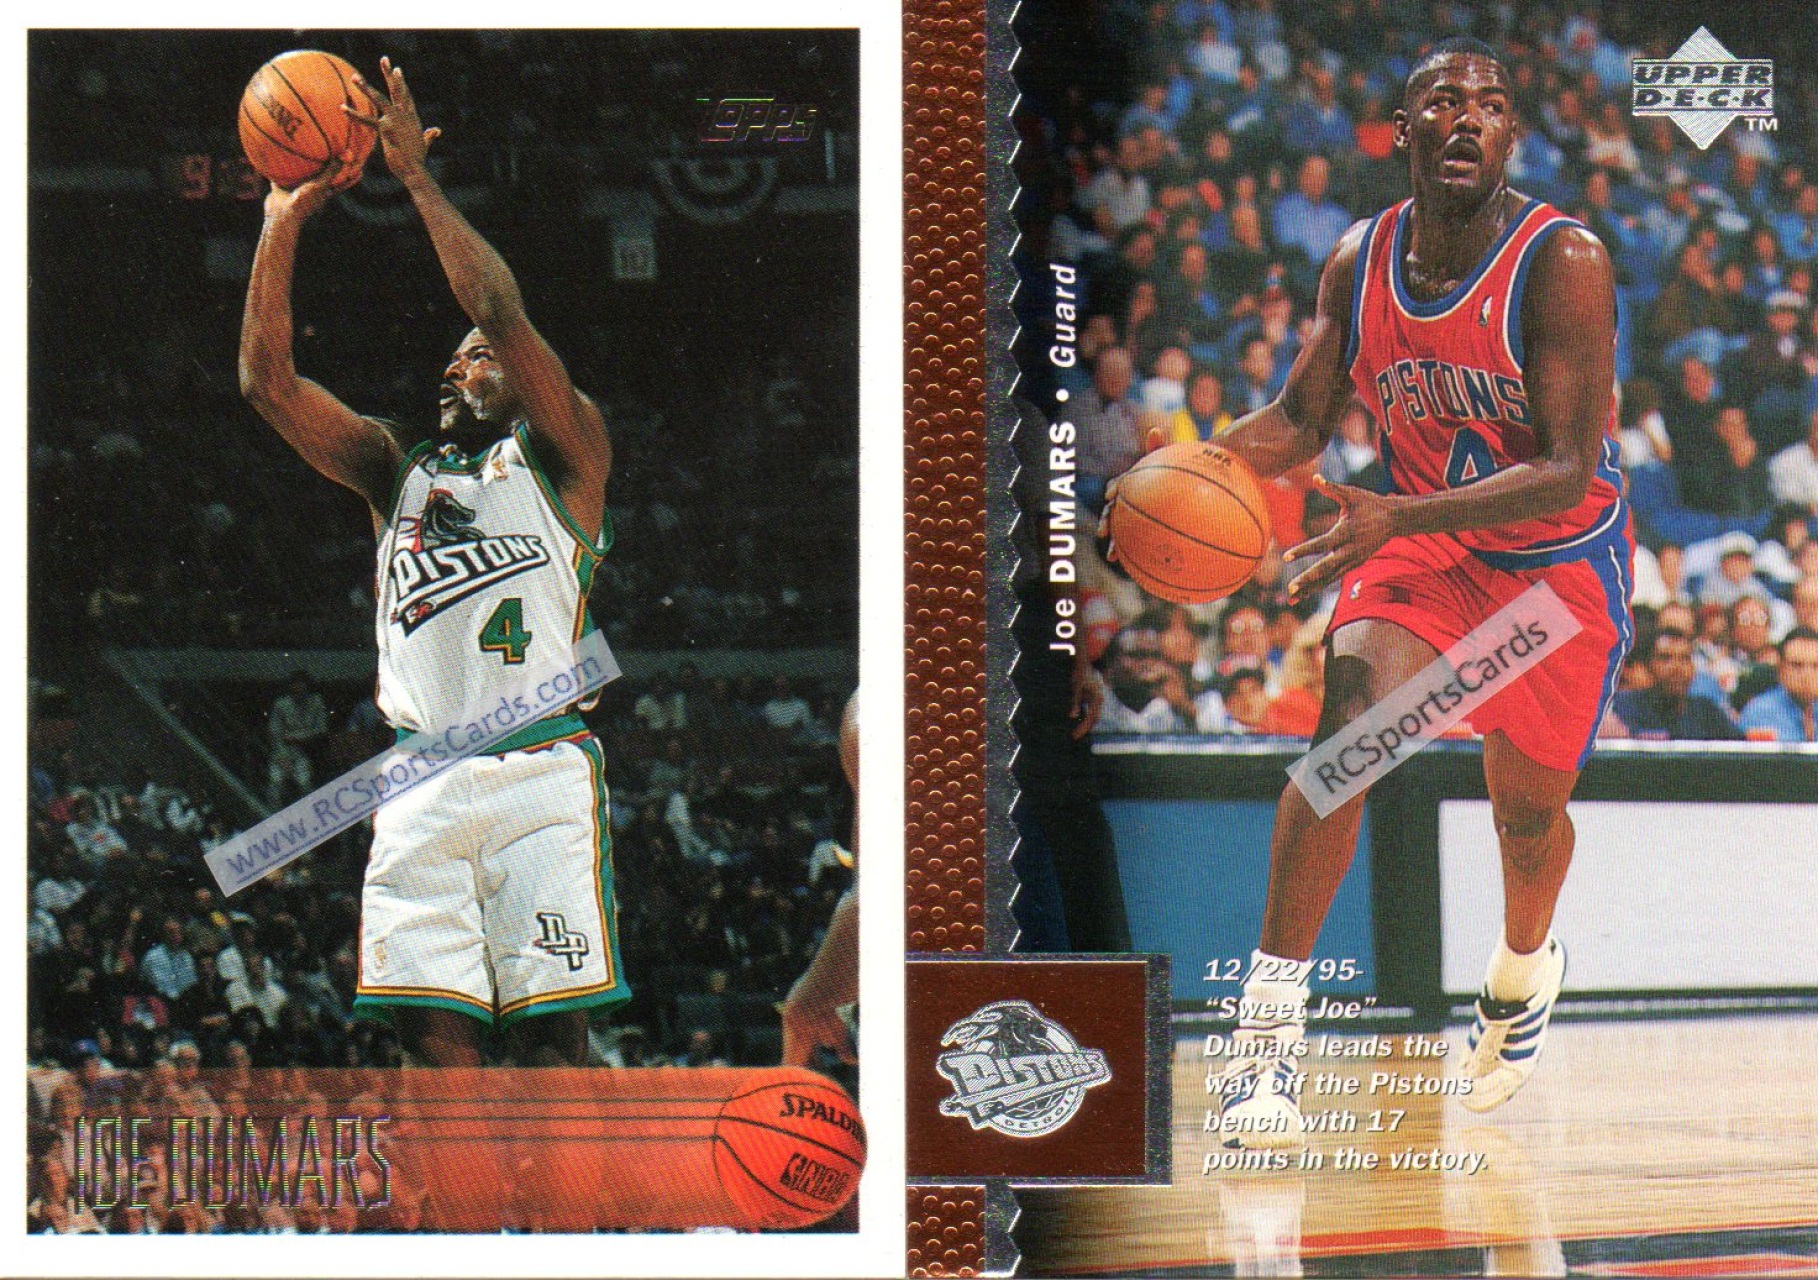  JOE DUMARS 1996-97 Topps Basketball Card #213 Detroit Pistons :  Collectibles & Fine Art